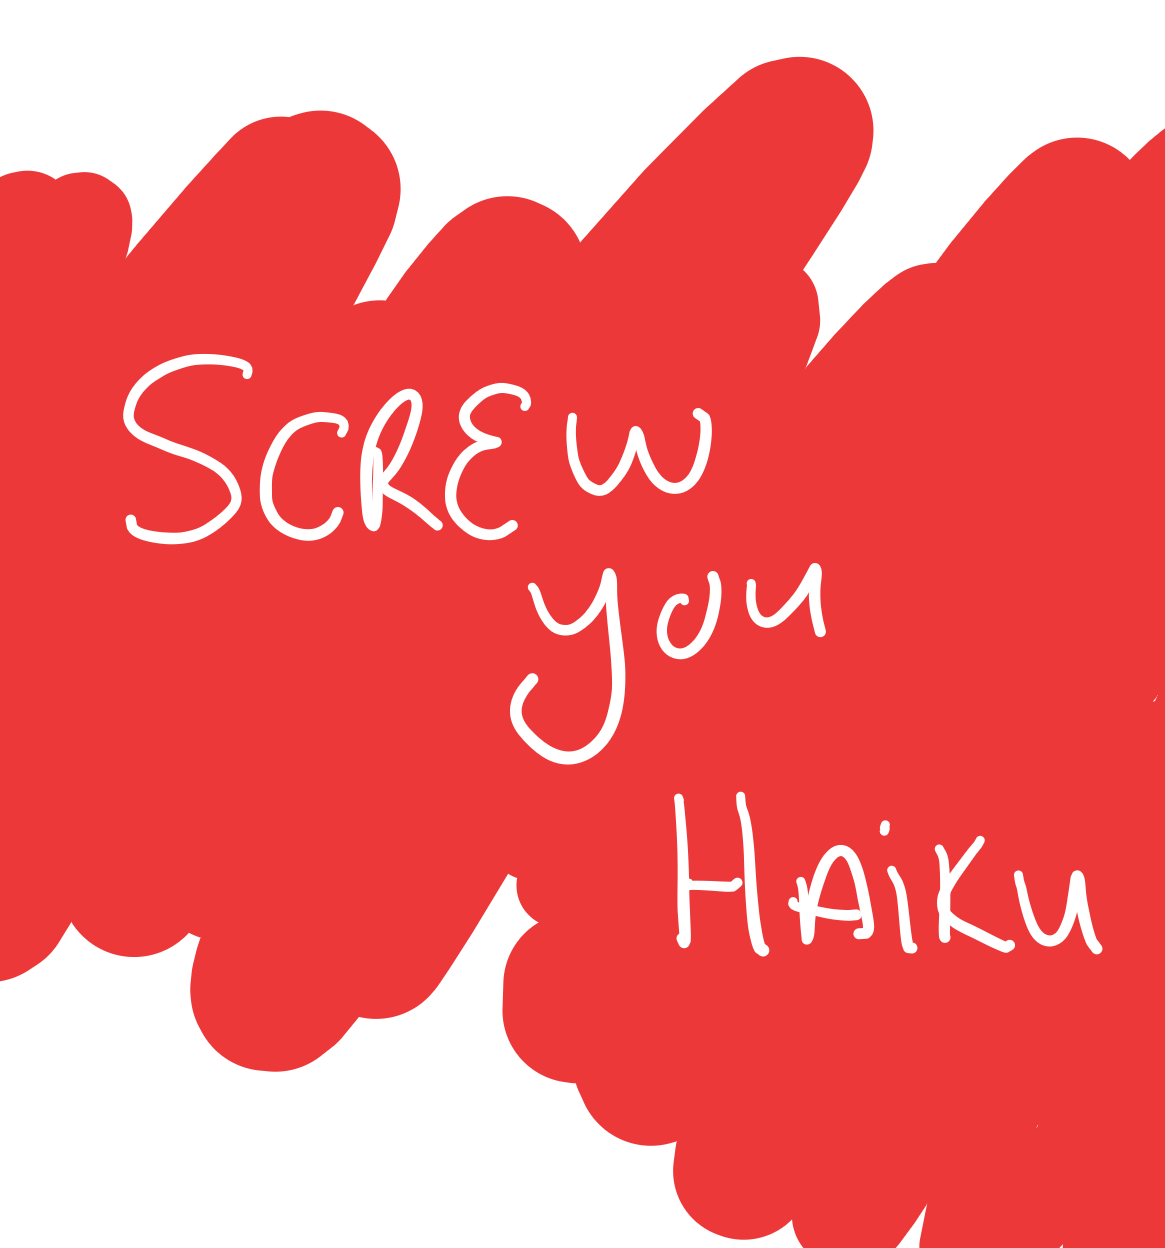 Screw you haiku – Lockdown special